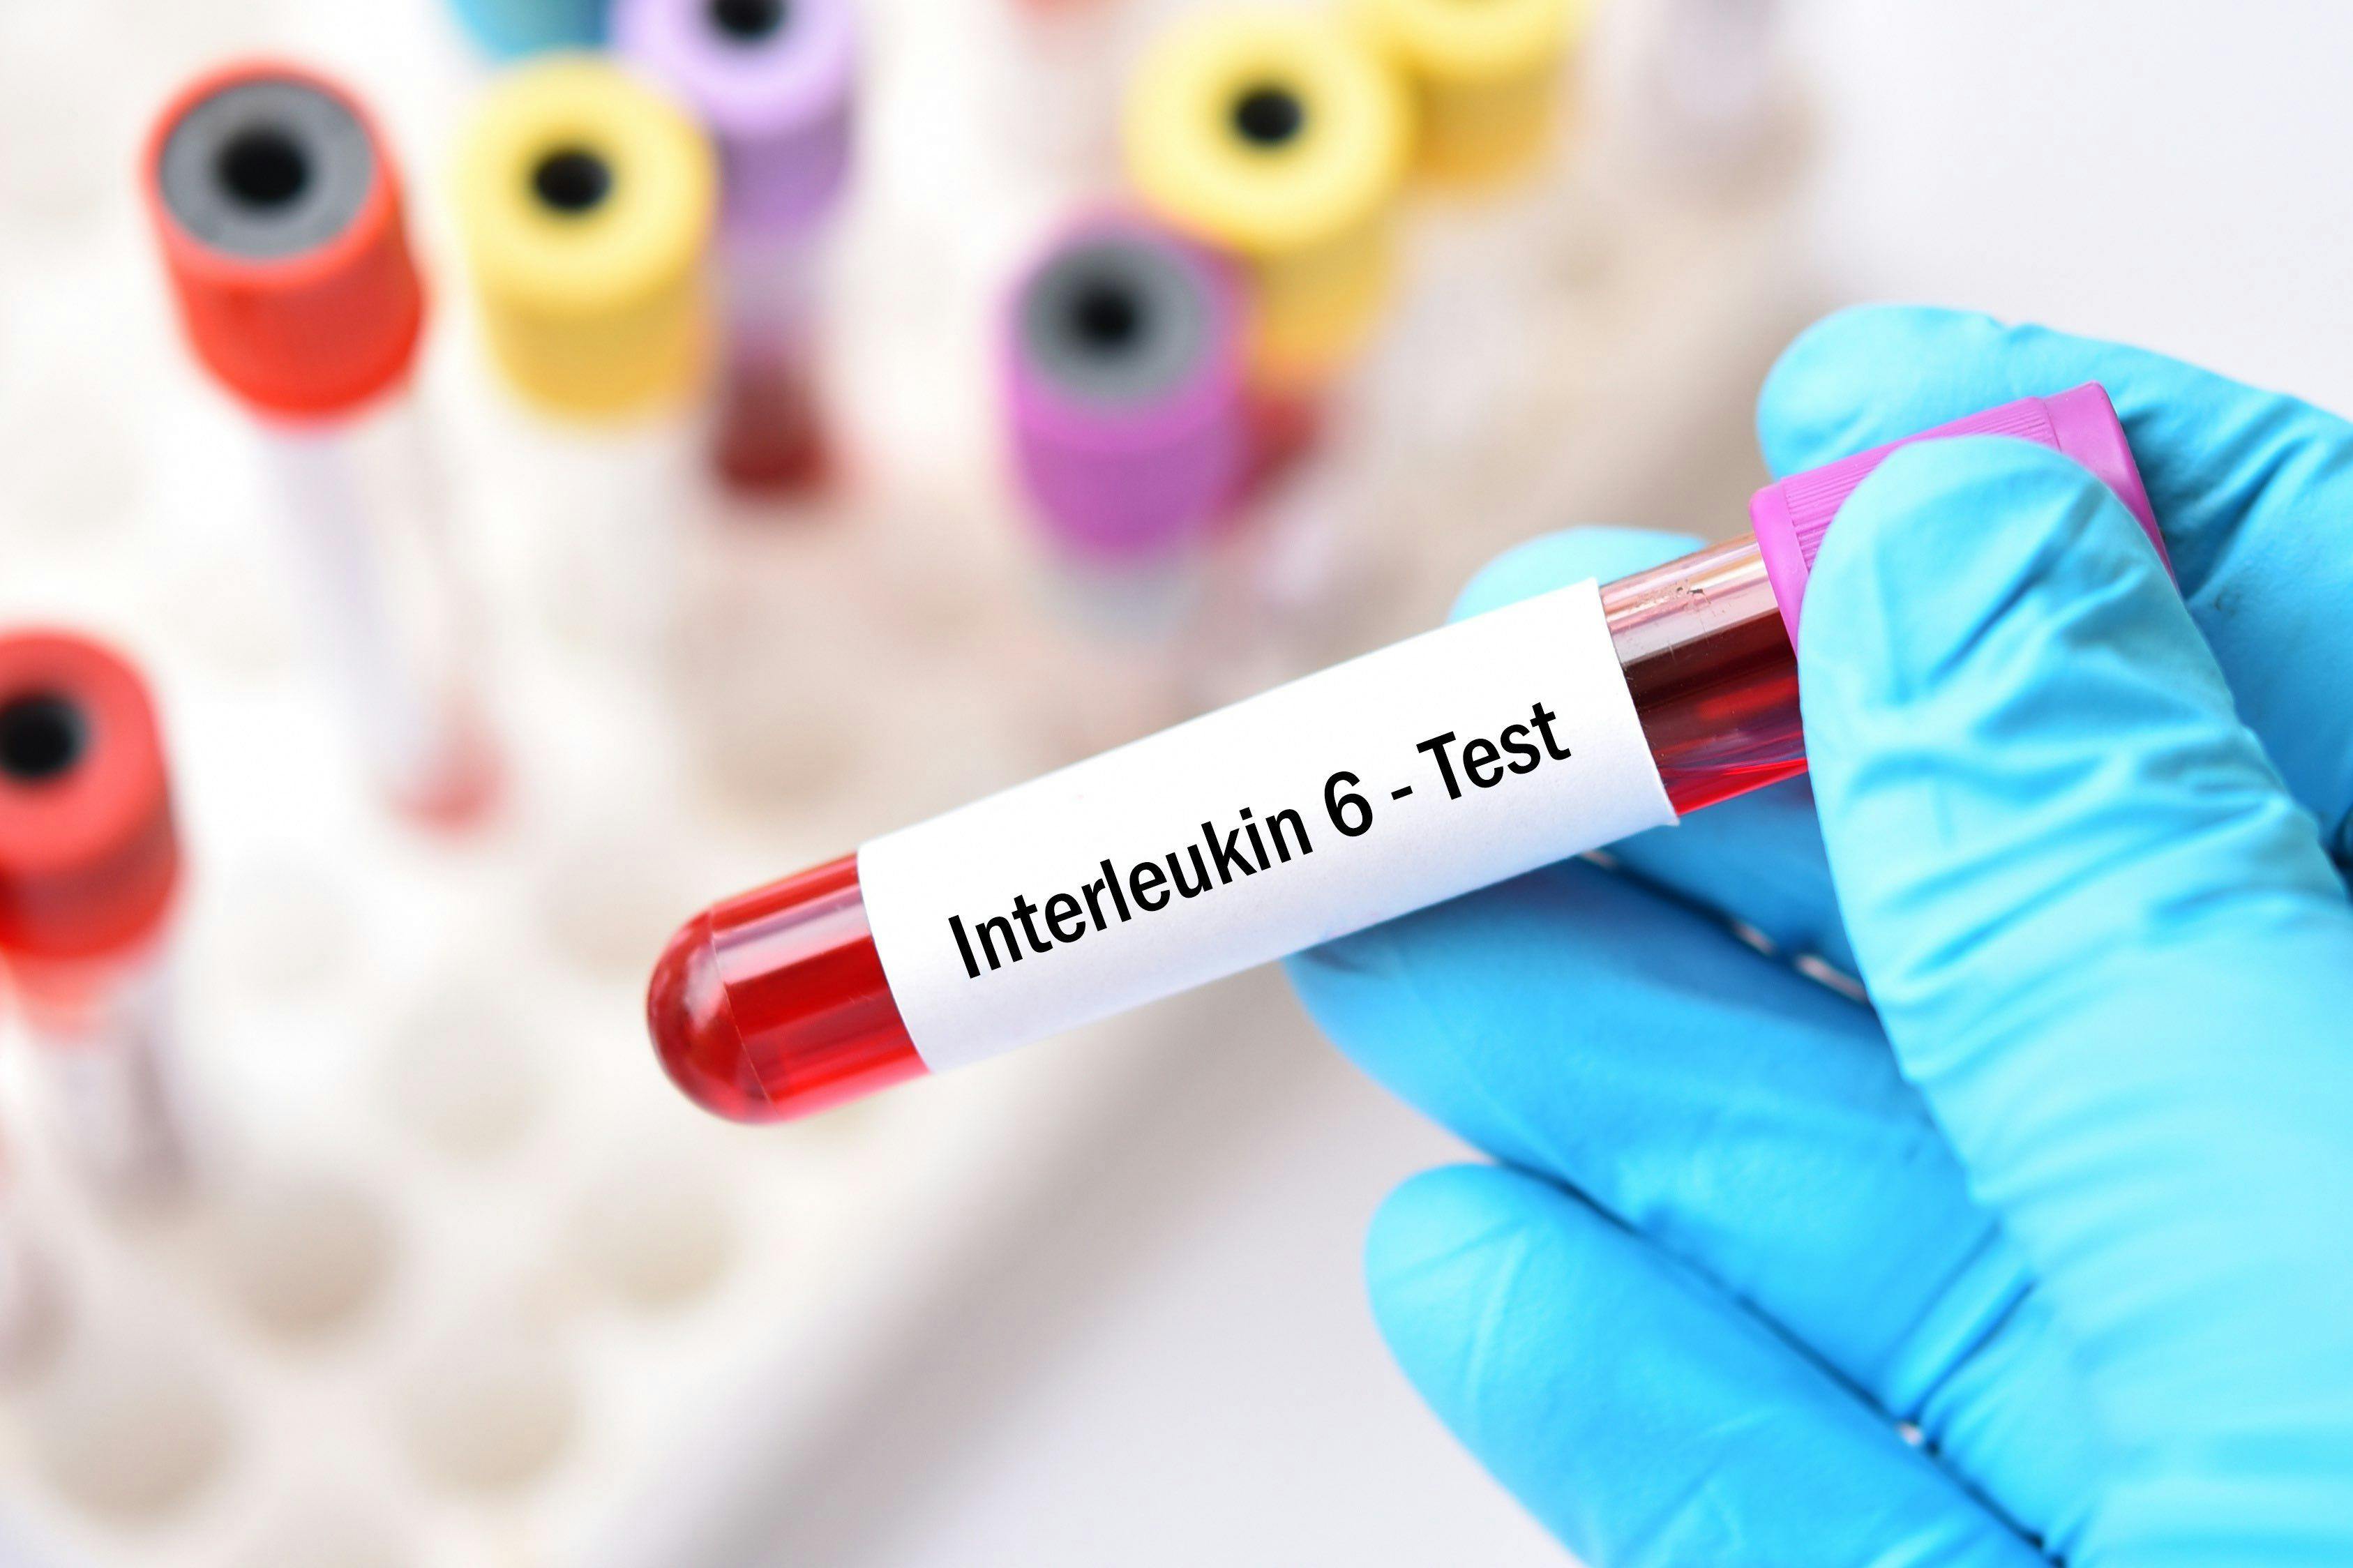 Interleukin 6 blood test | Image credit: jarun011 - stock.adobe.com